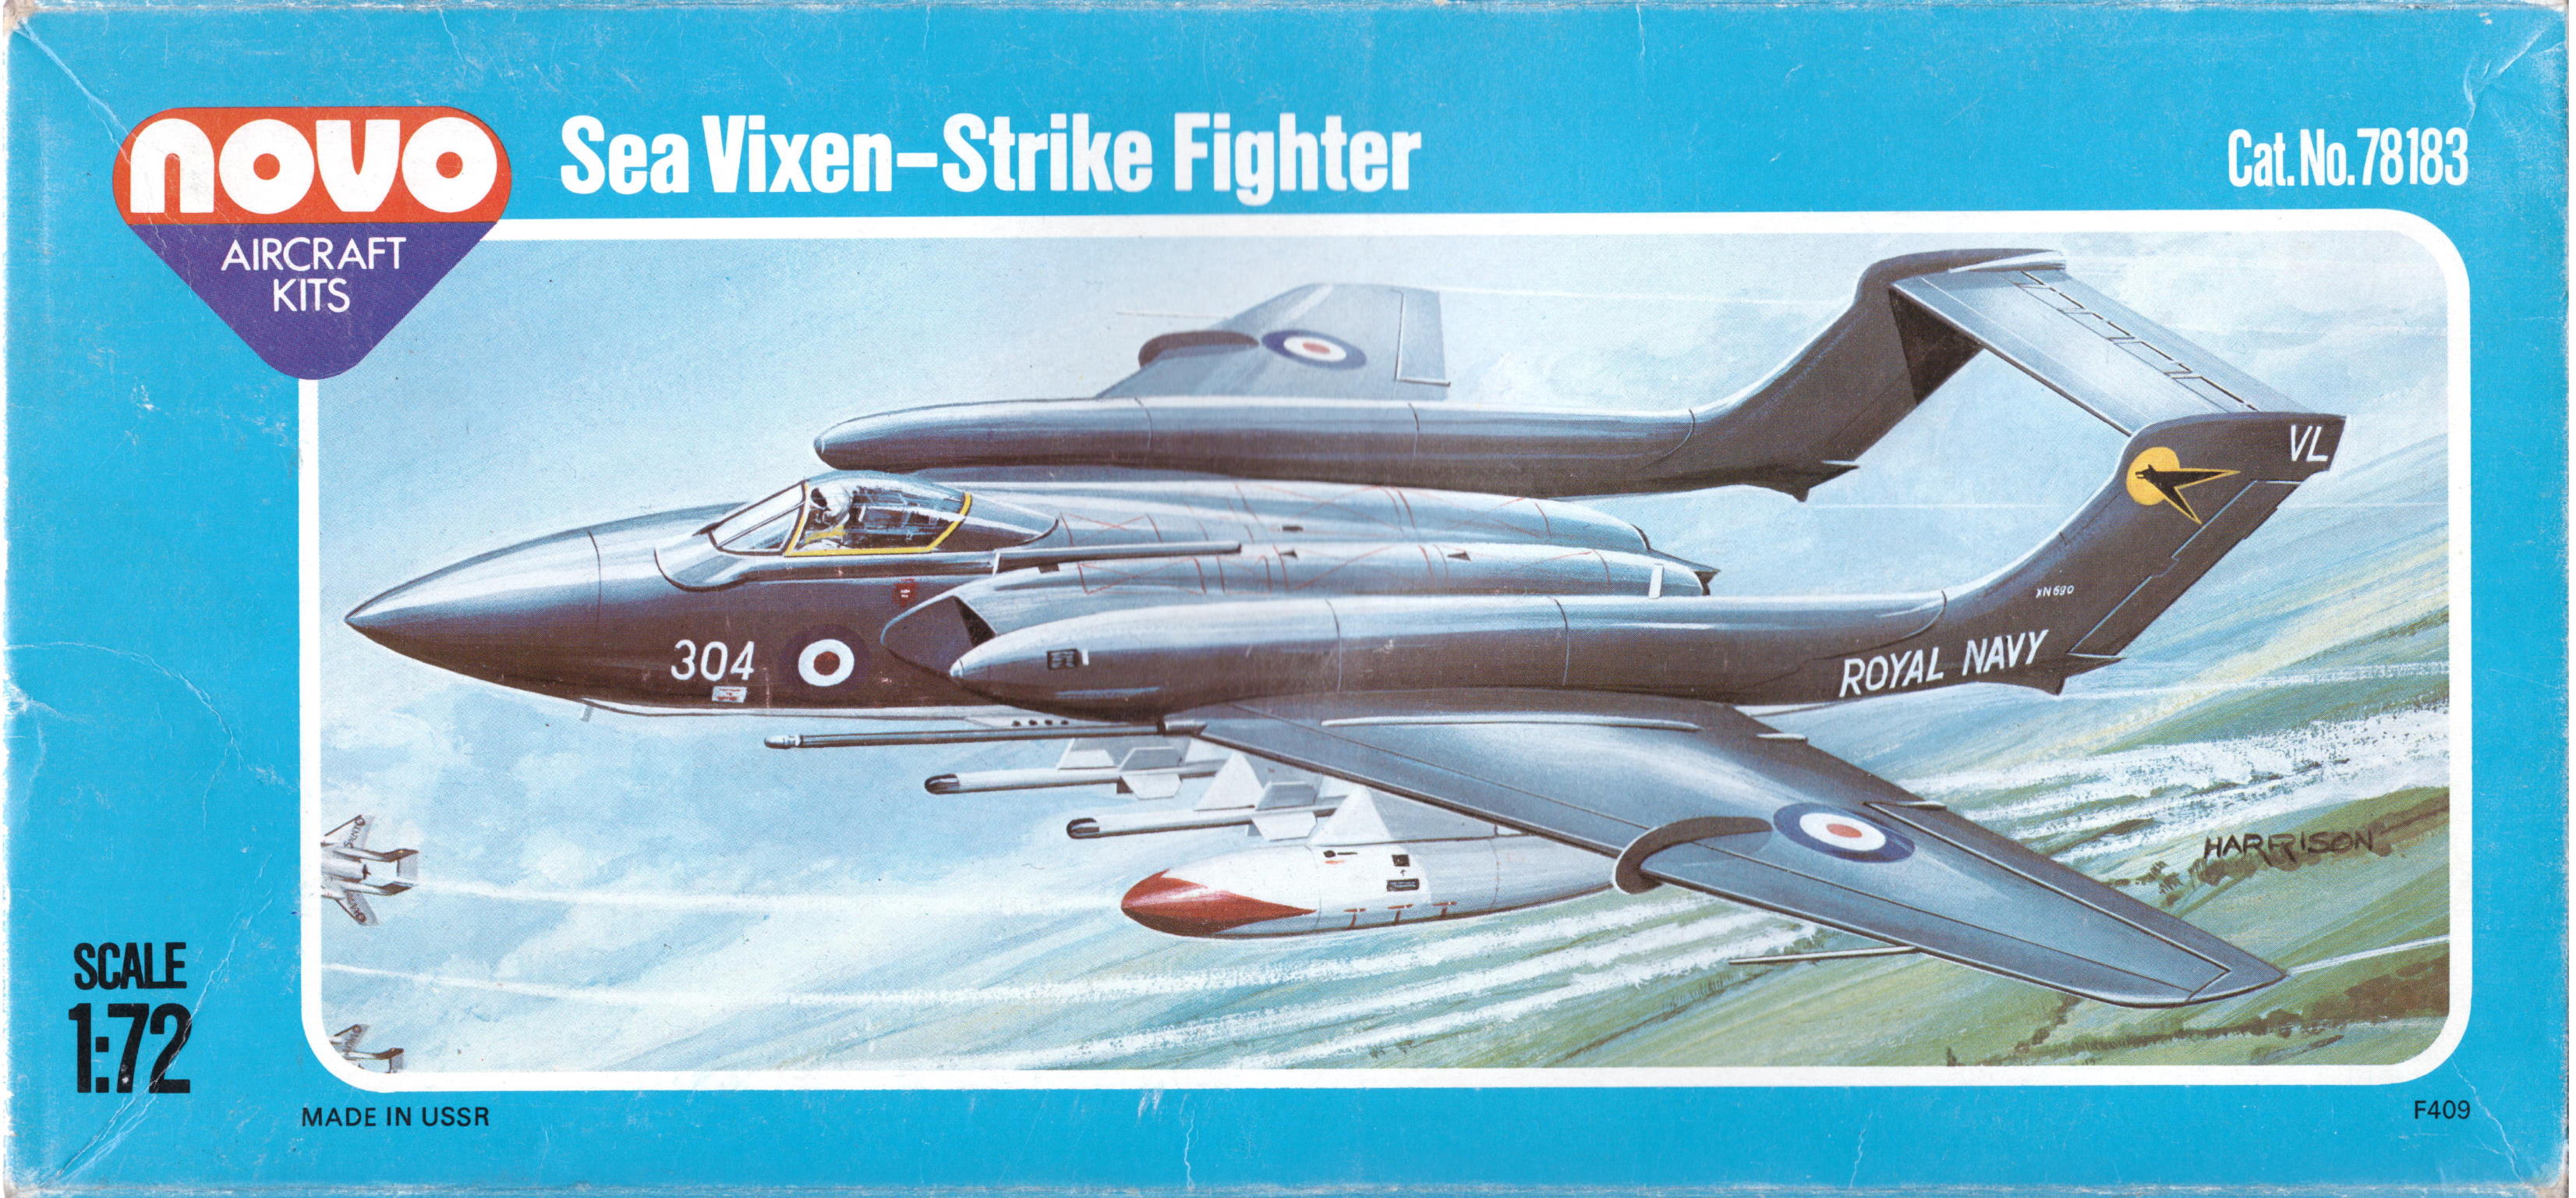 Коробка NOVO F409 Hawker Siddeley Sea Vixen FAW.Mk.2 Strike Fighter, NOVO Toys Ltd Cat.No.78054